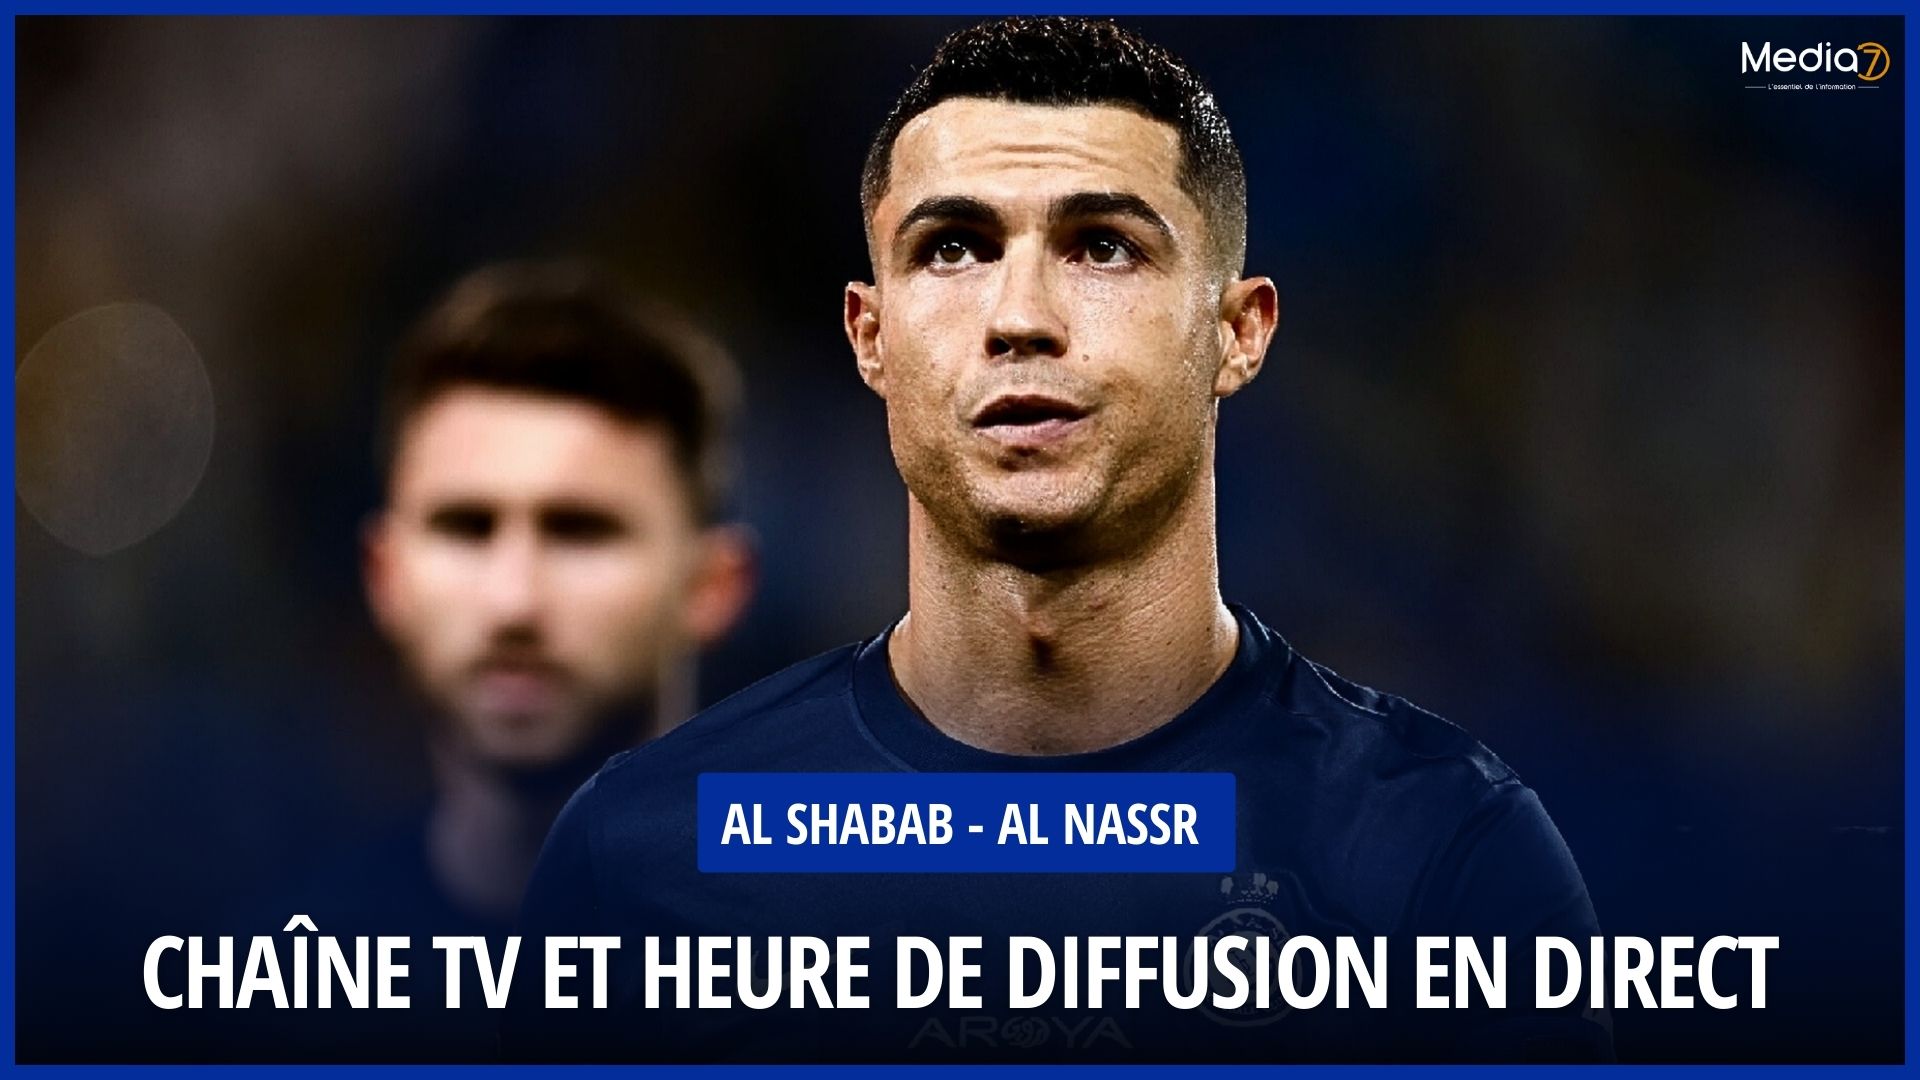 Al Shabab - Al Nassr Match Live: TV Channel and Broadcast Schedule - Media7